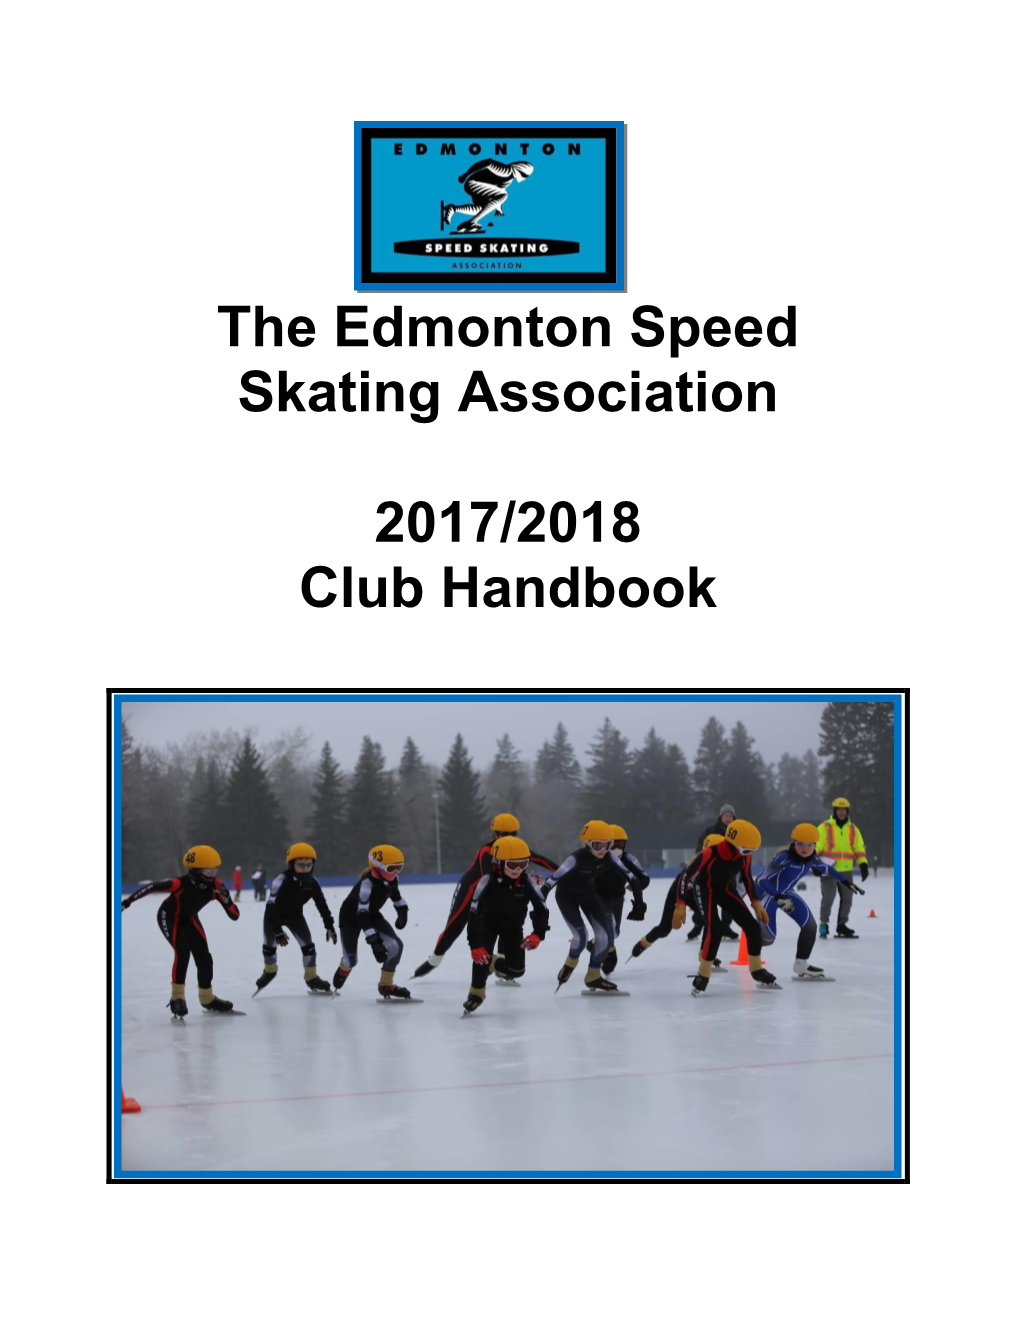 The Edmonton Speed Skating Association 2017/2018 Club Handbook